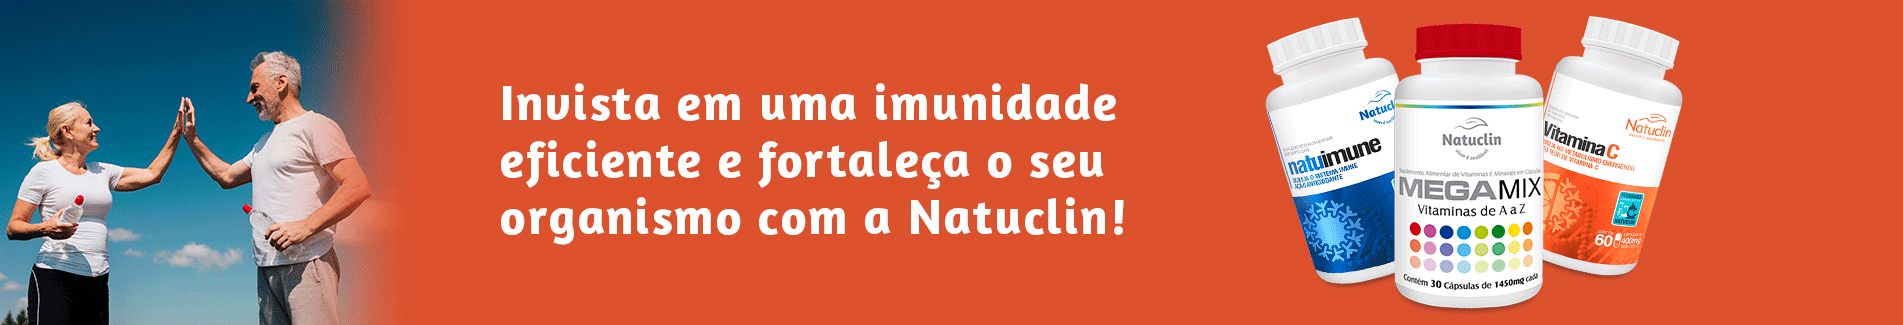 Imunidade - Natuclin